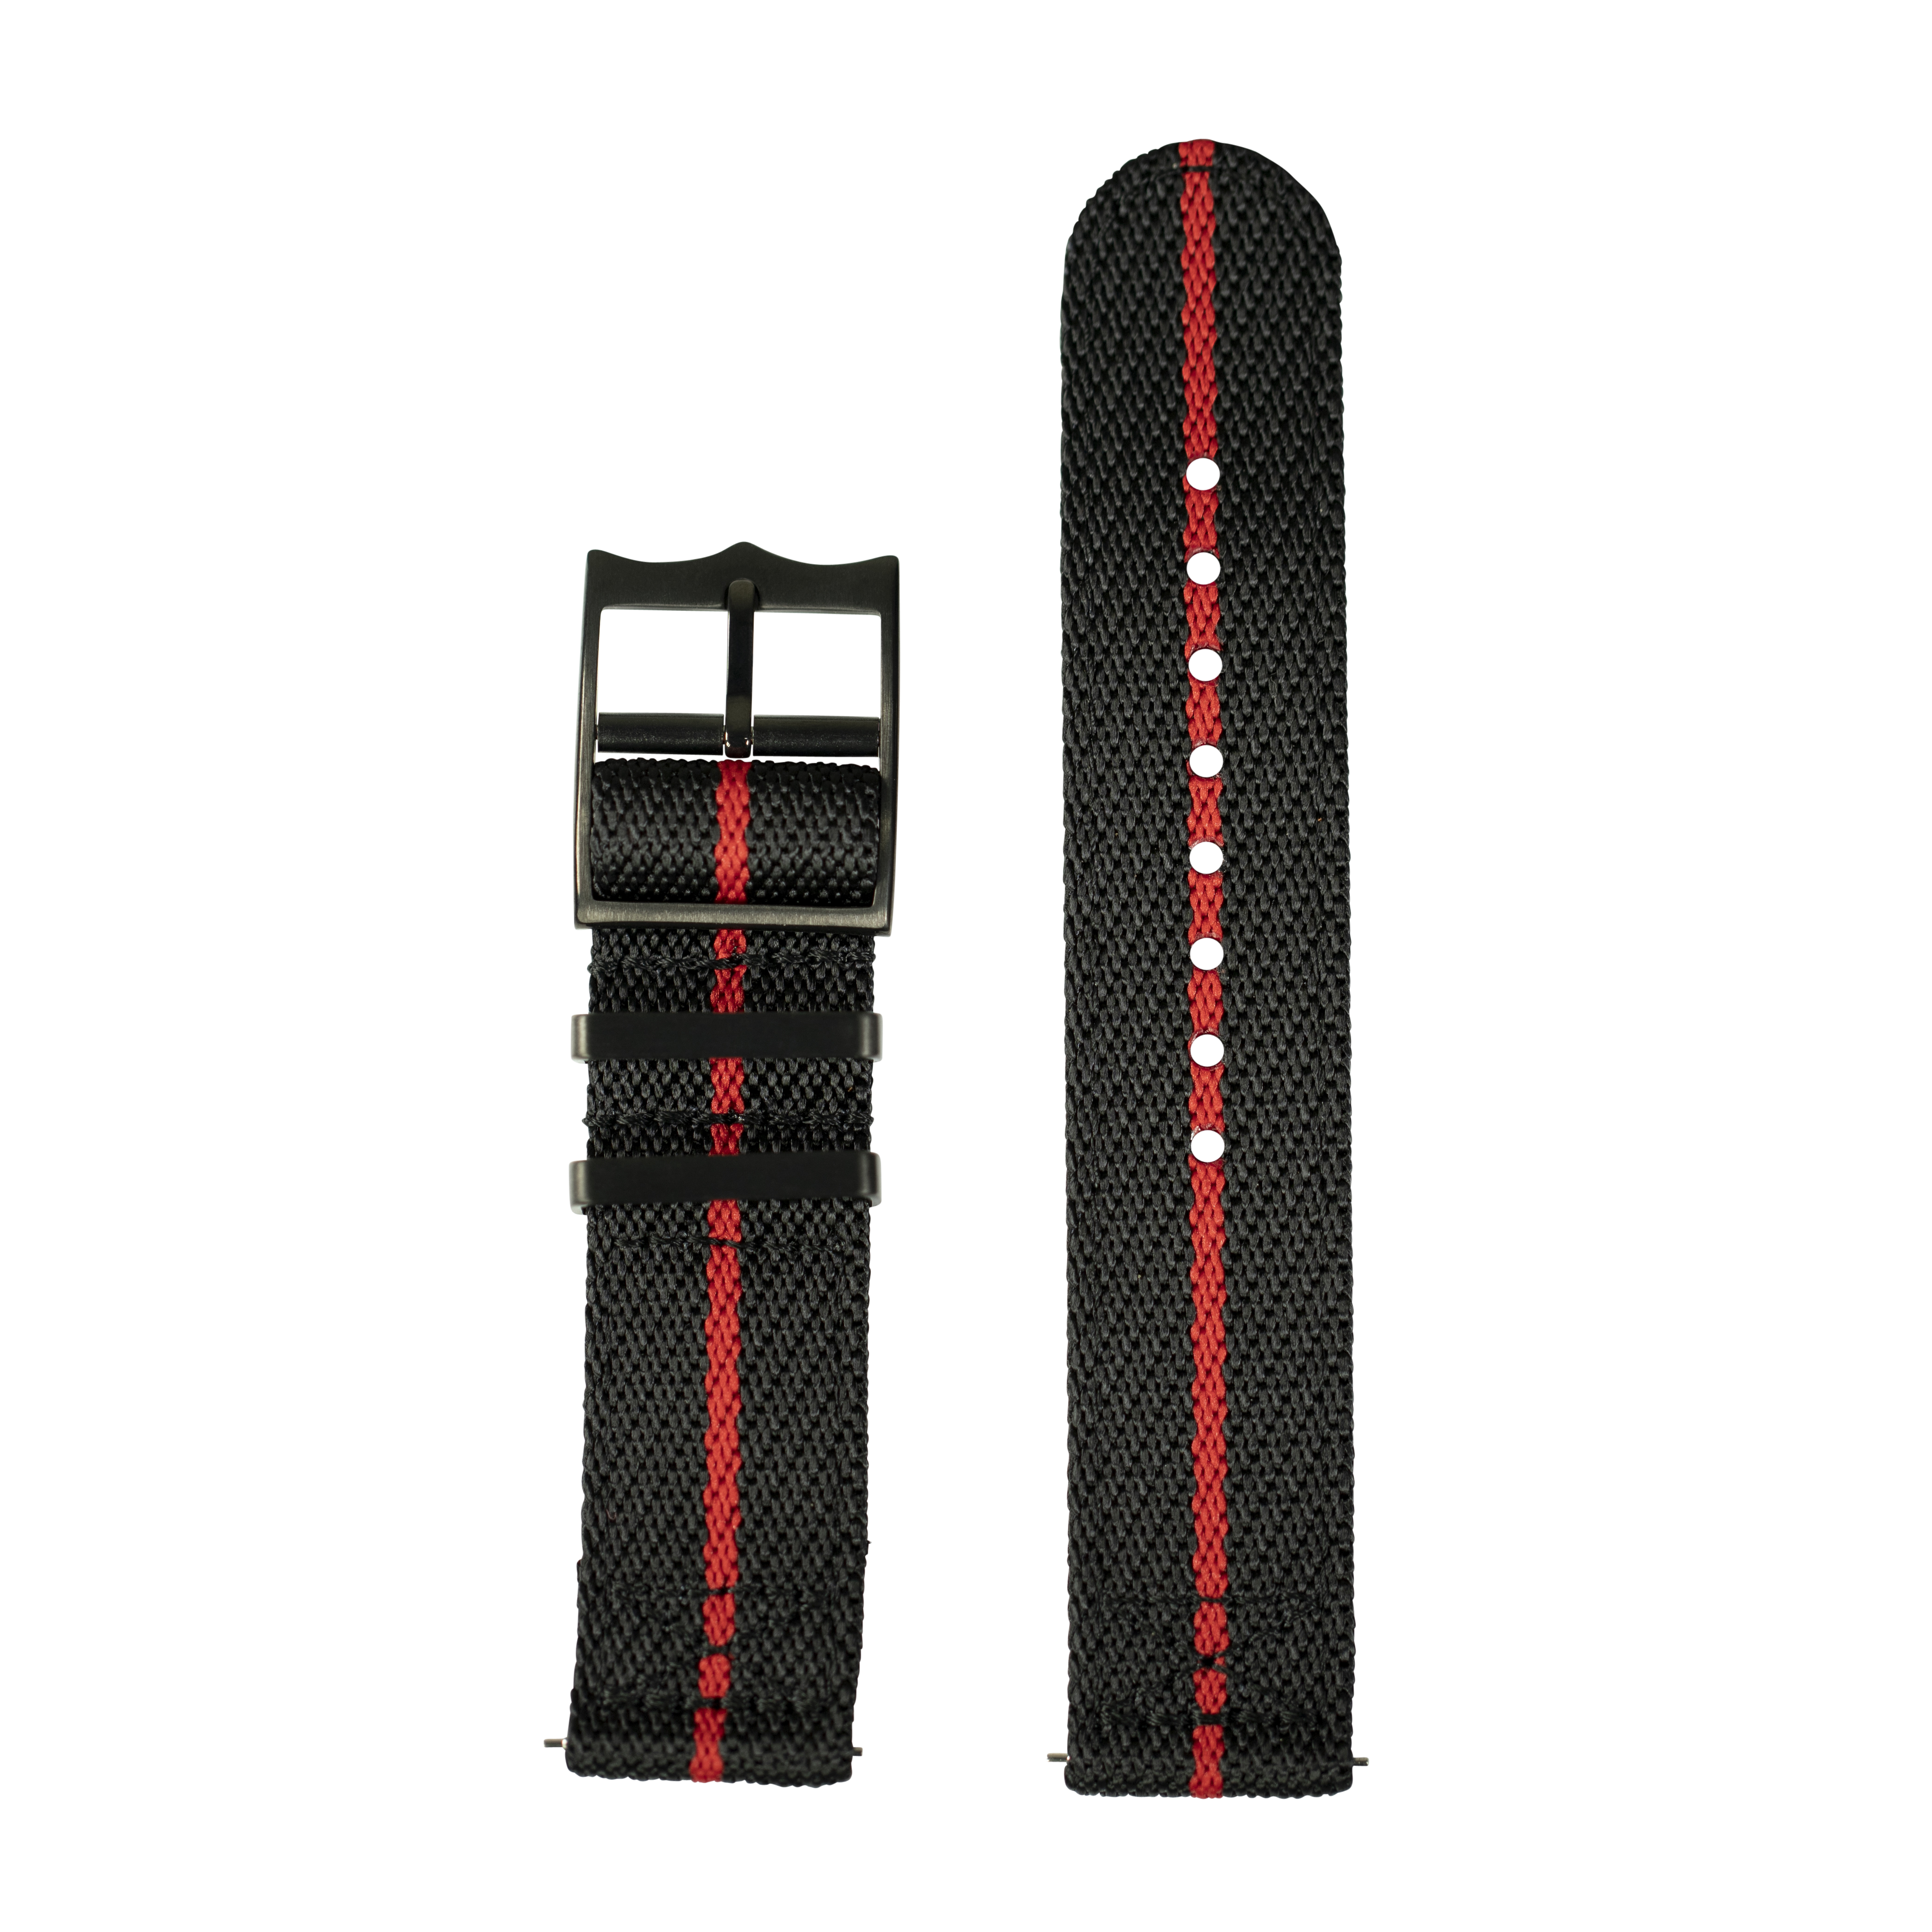 [QuickFit] Cross Militex - Black / Red [Black Hardware] 20mm